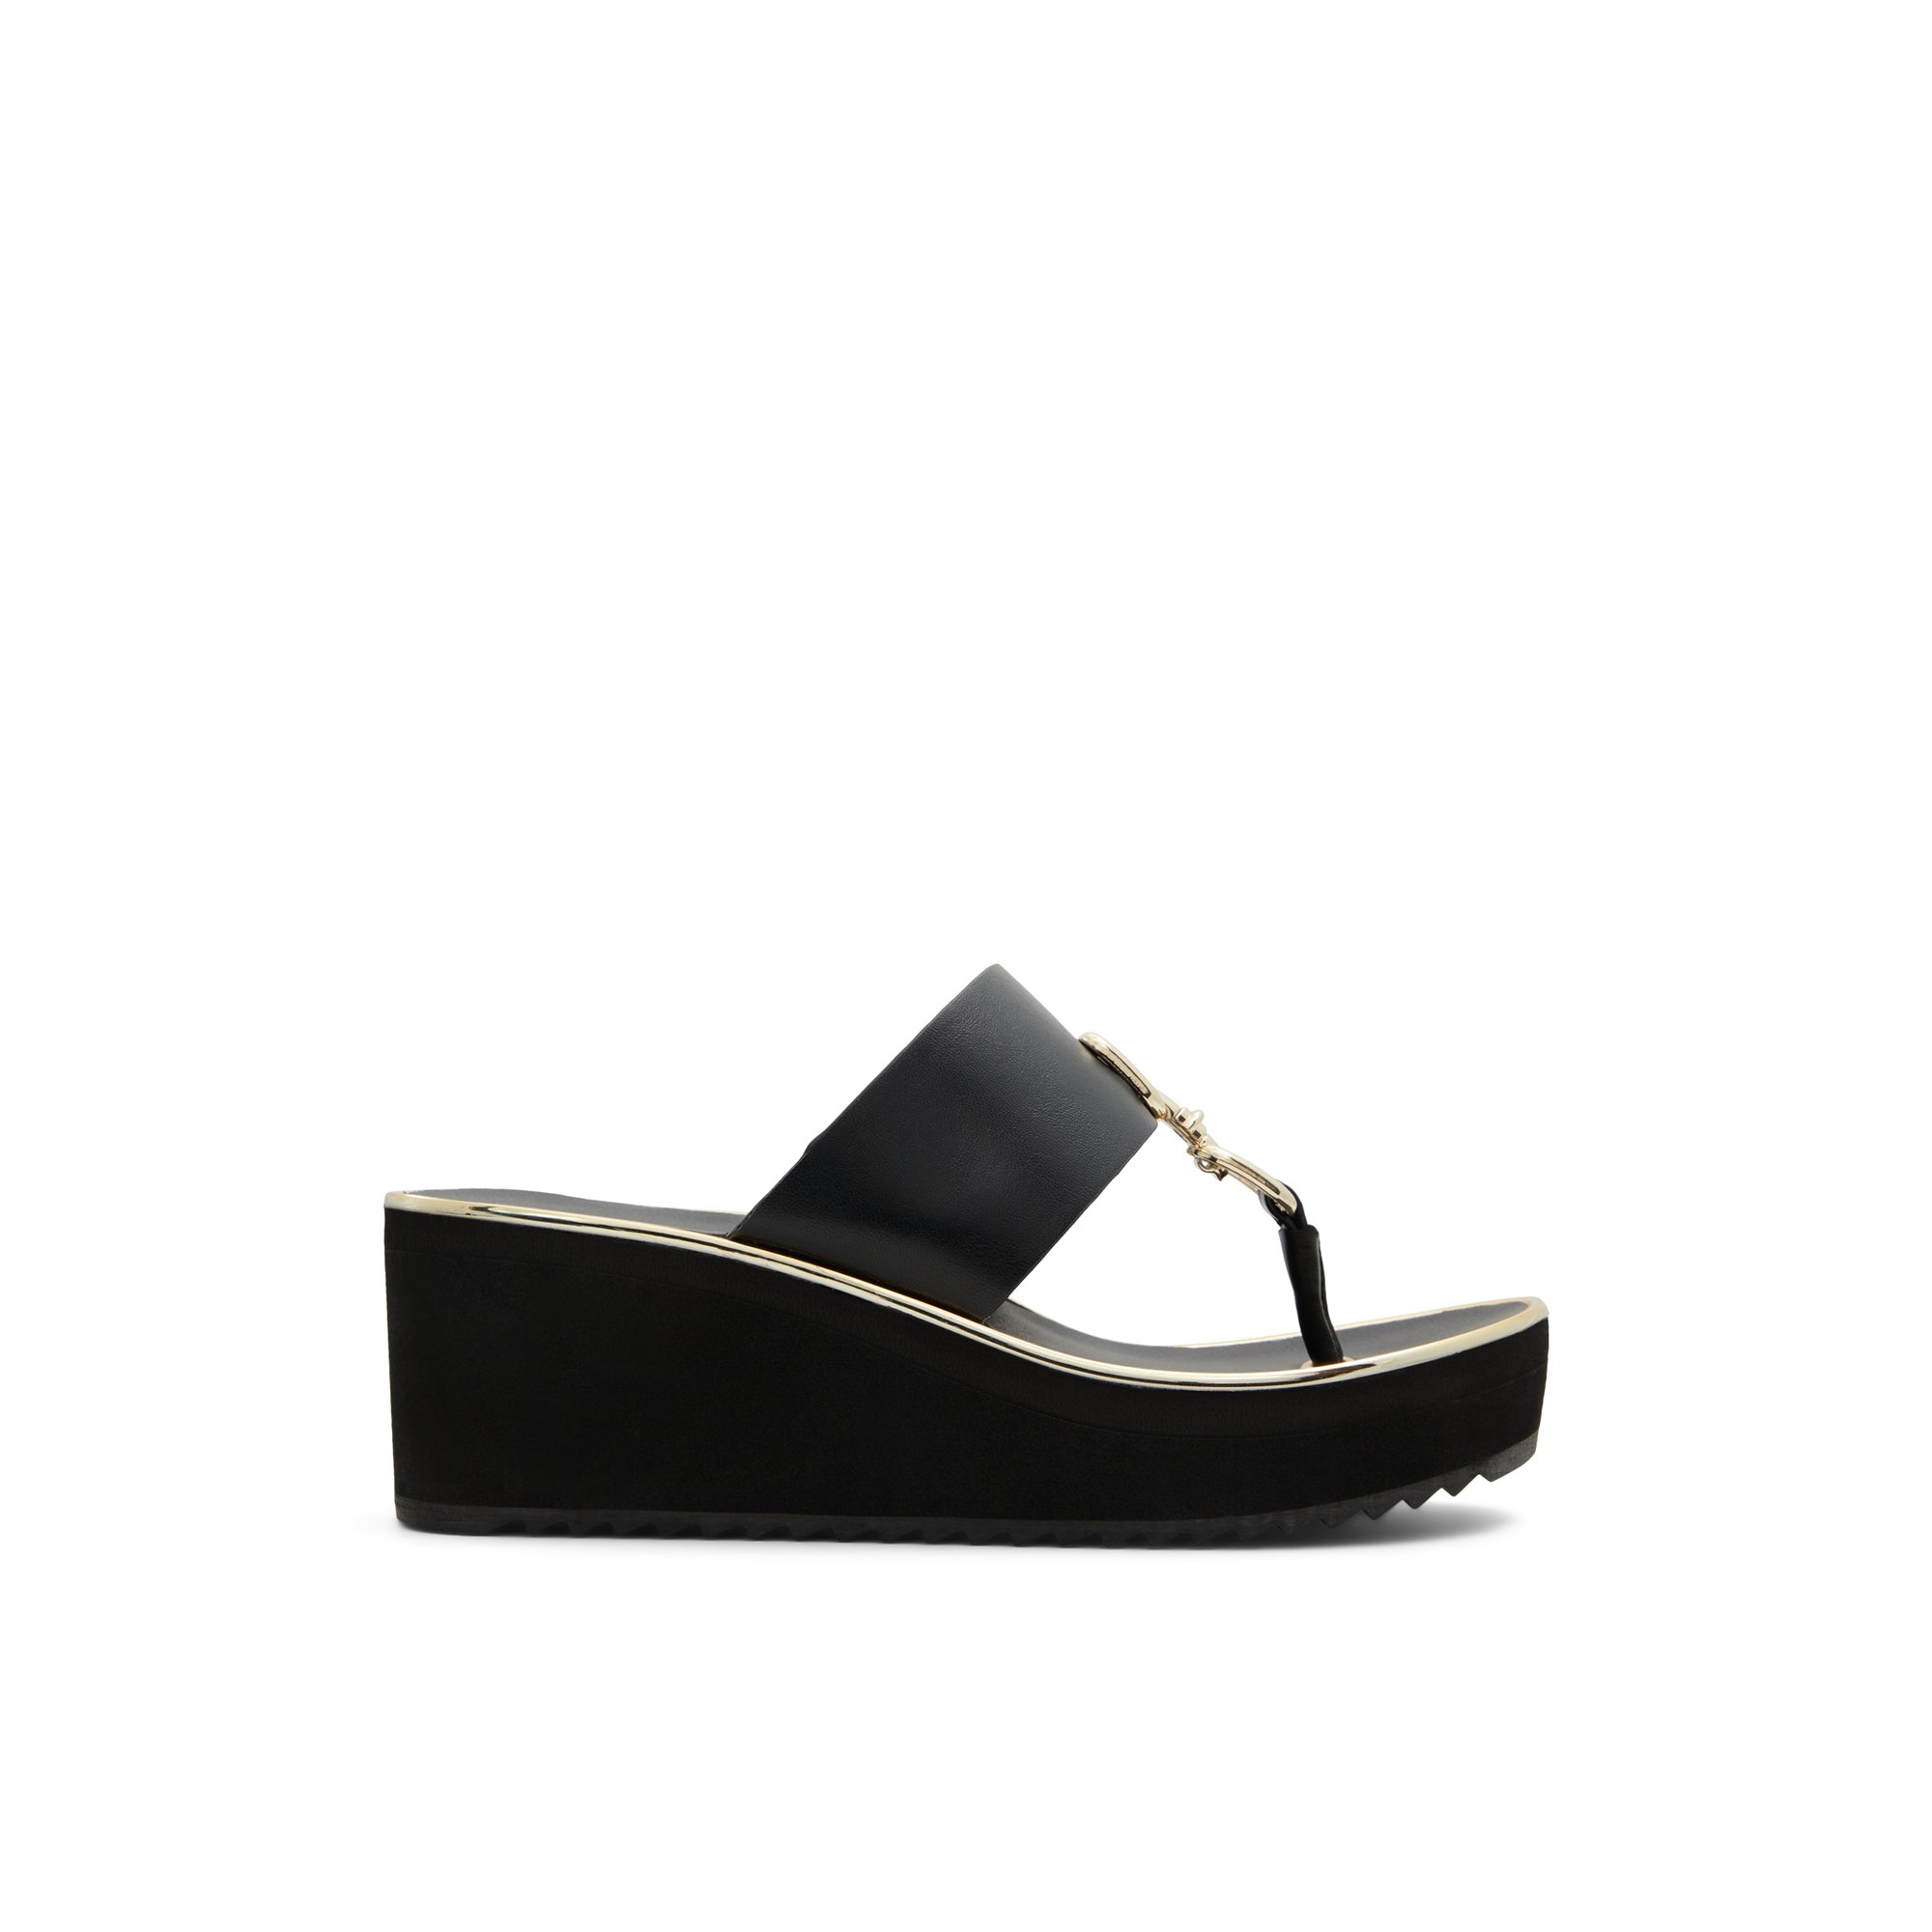 ALDO Maesllan - Women's Sandals Wedges - Black